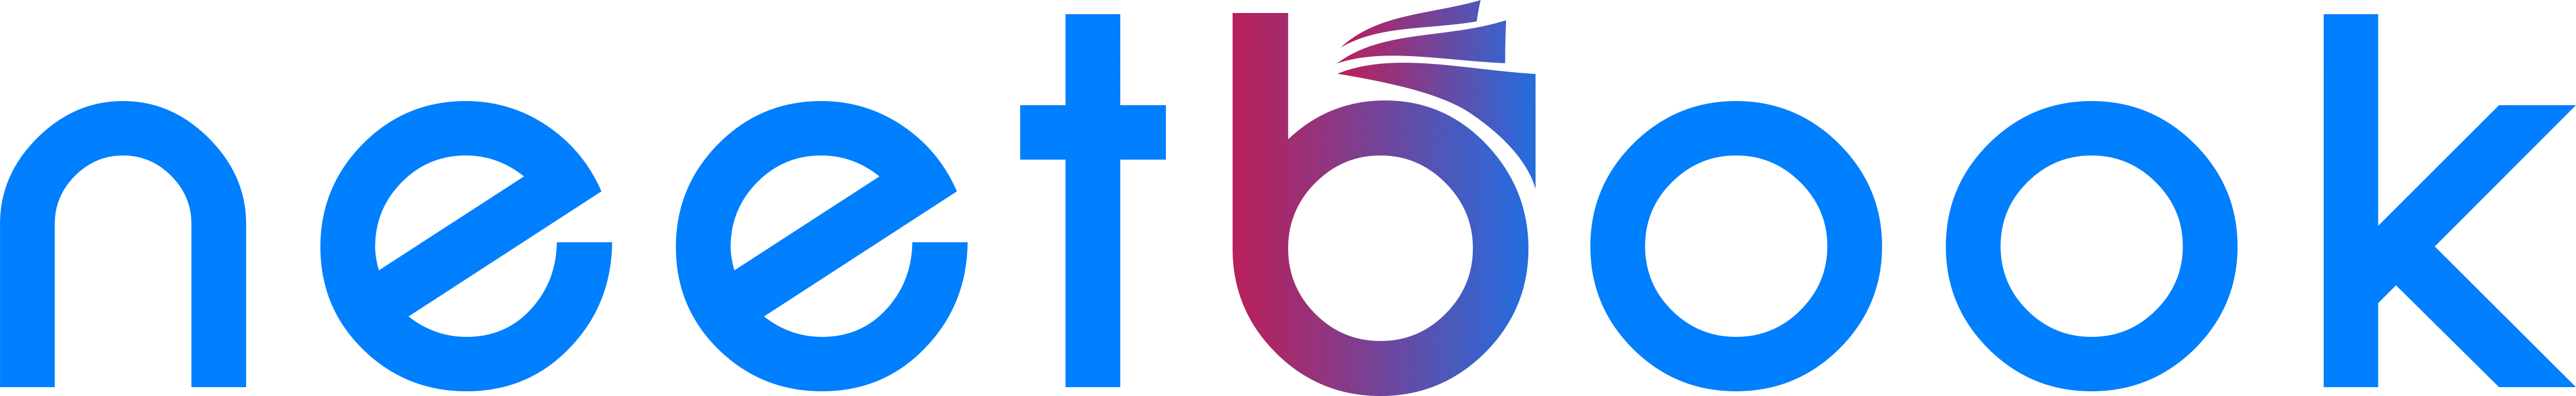 neetbook-logo